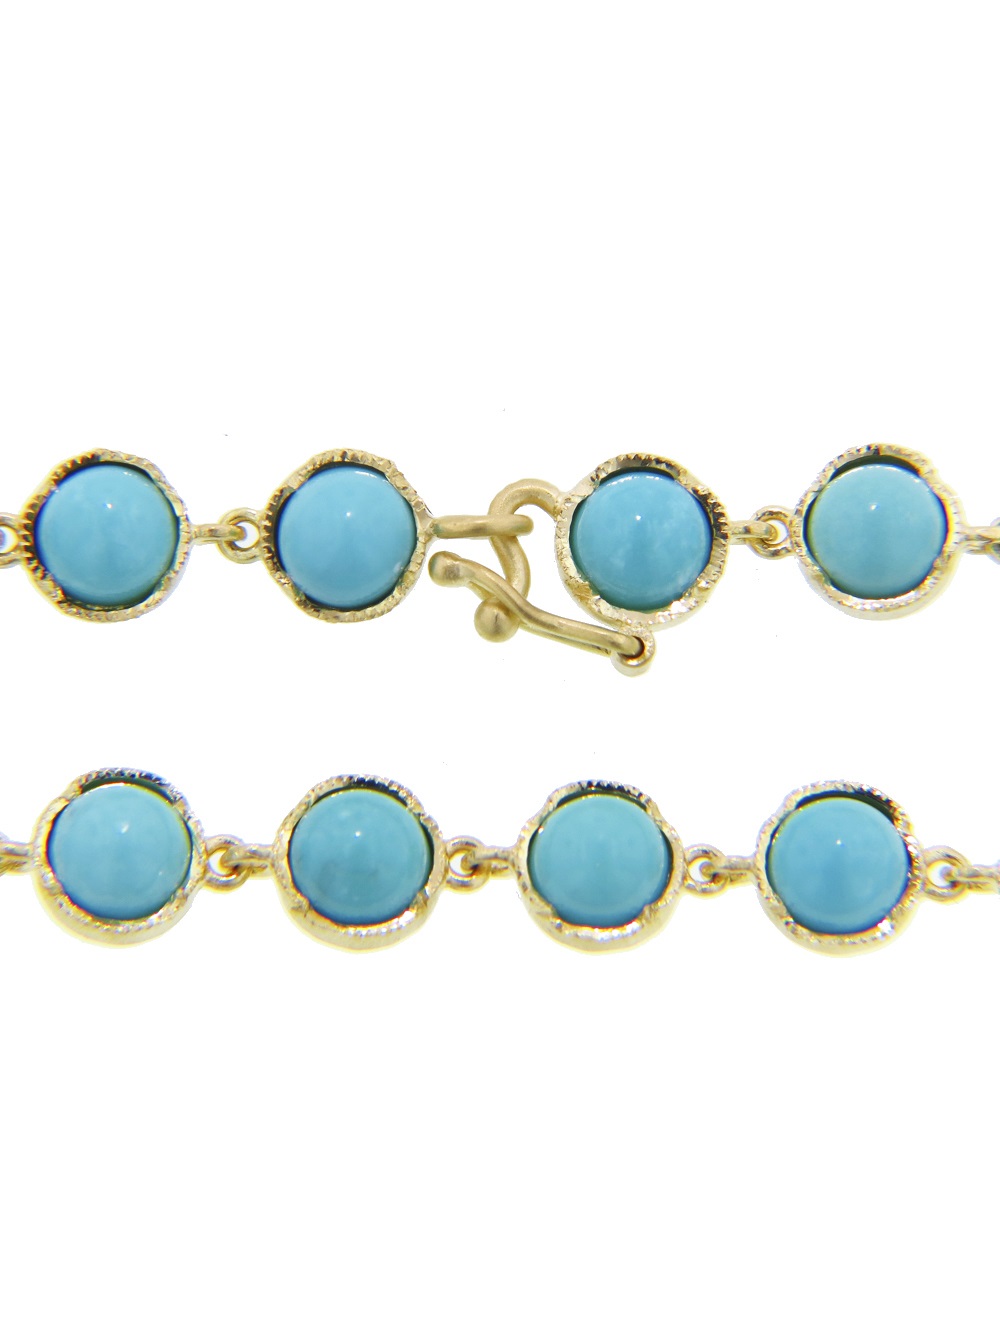 Lyst - Irene Neuwirth Turquoise Bracelet in Blue